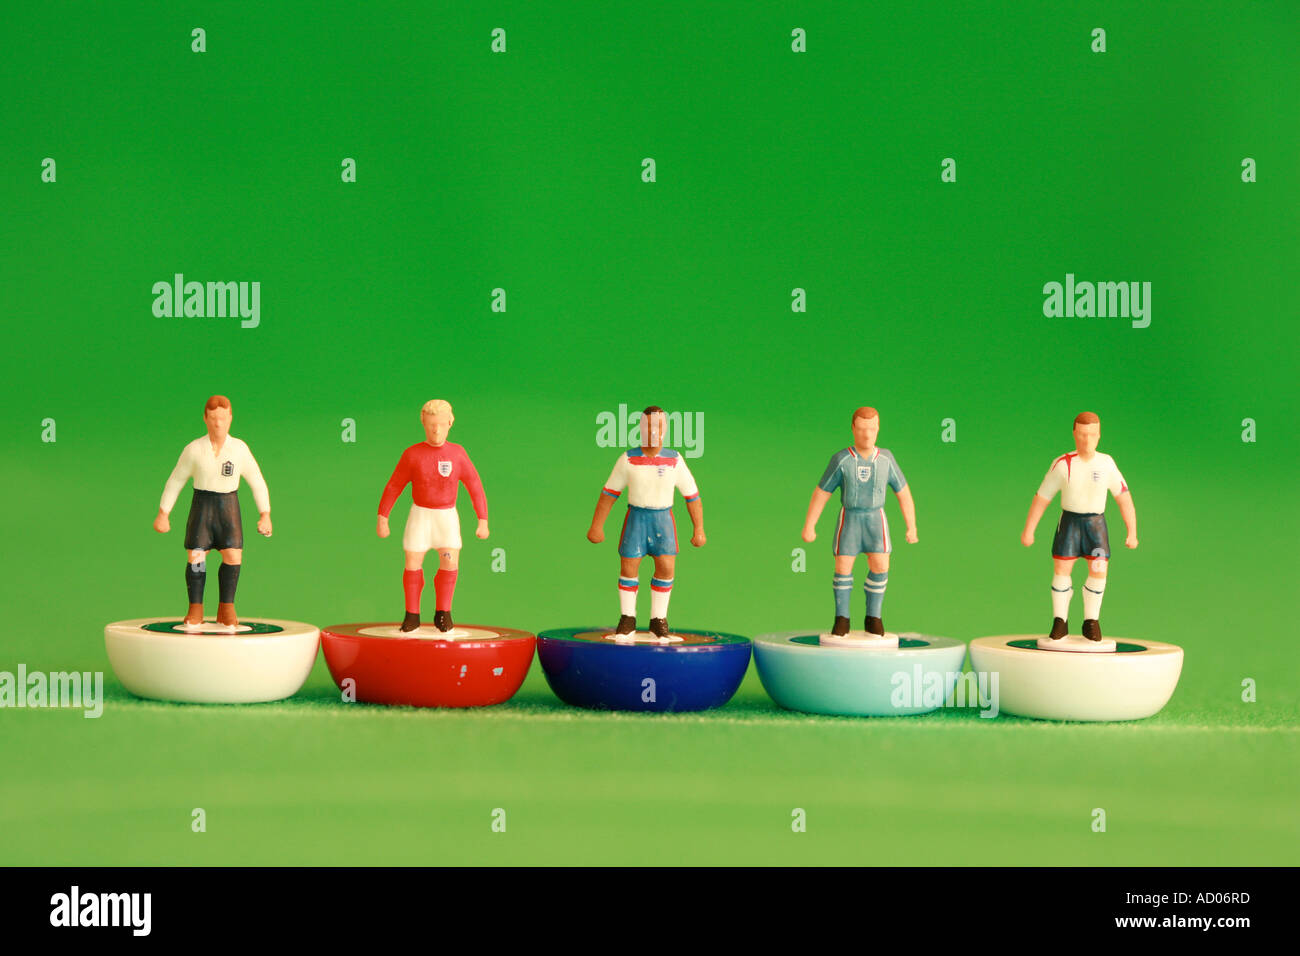 England international football kits on subbuteo men Stock Photo